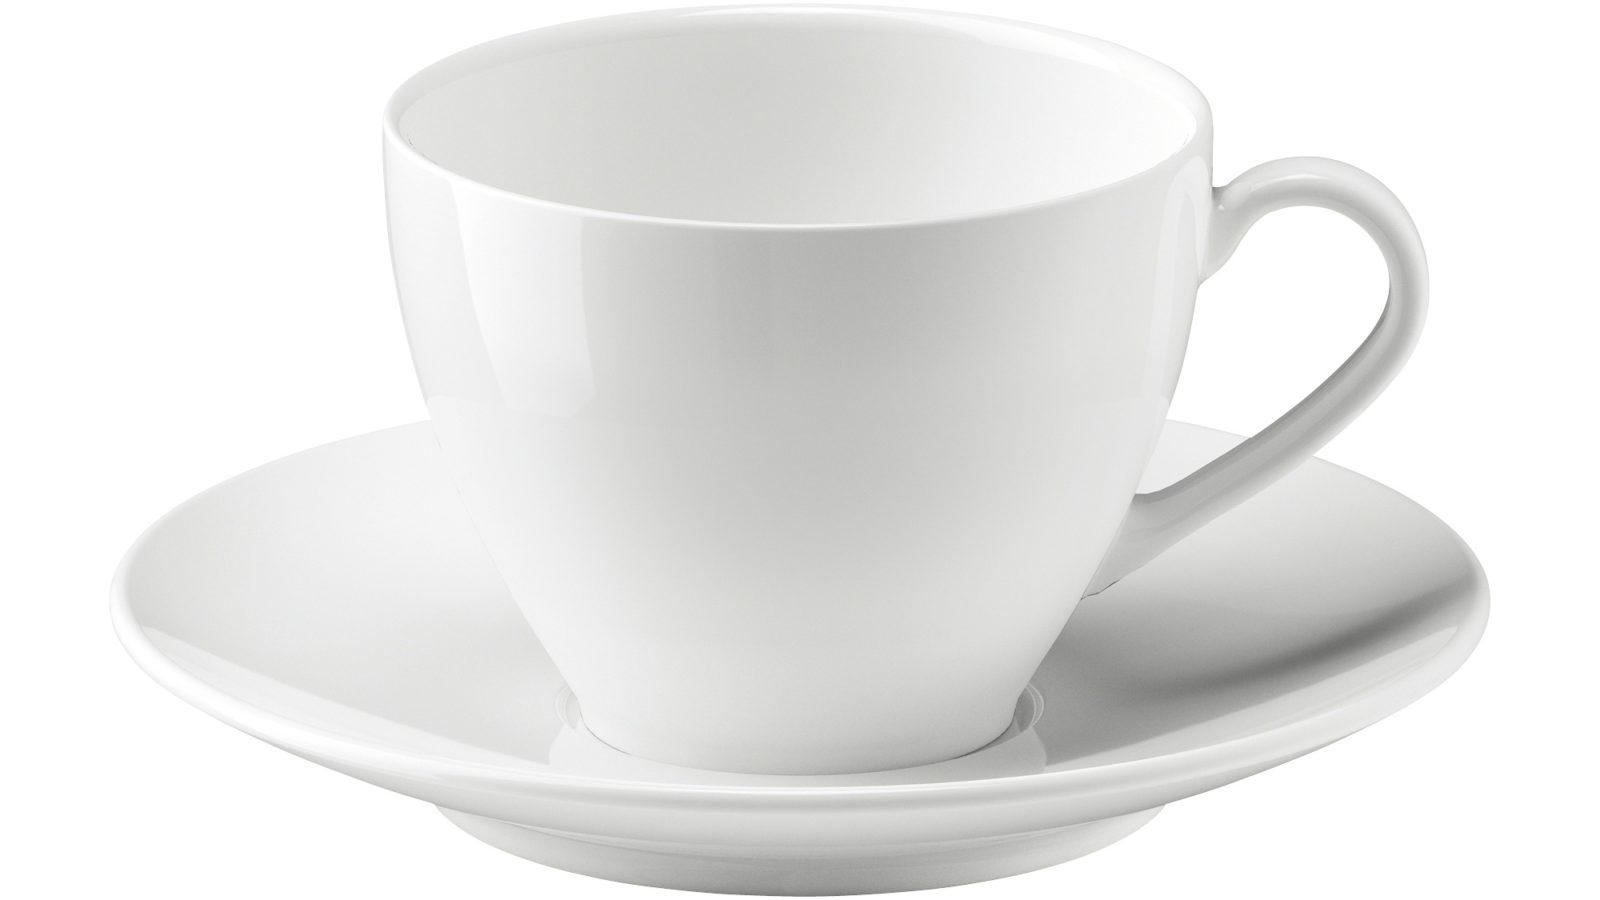 IKEA 365+ coffee cup and saucer.